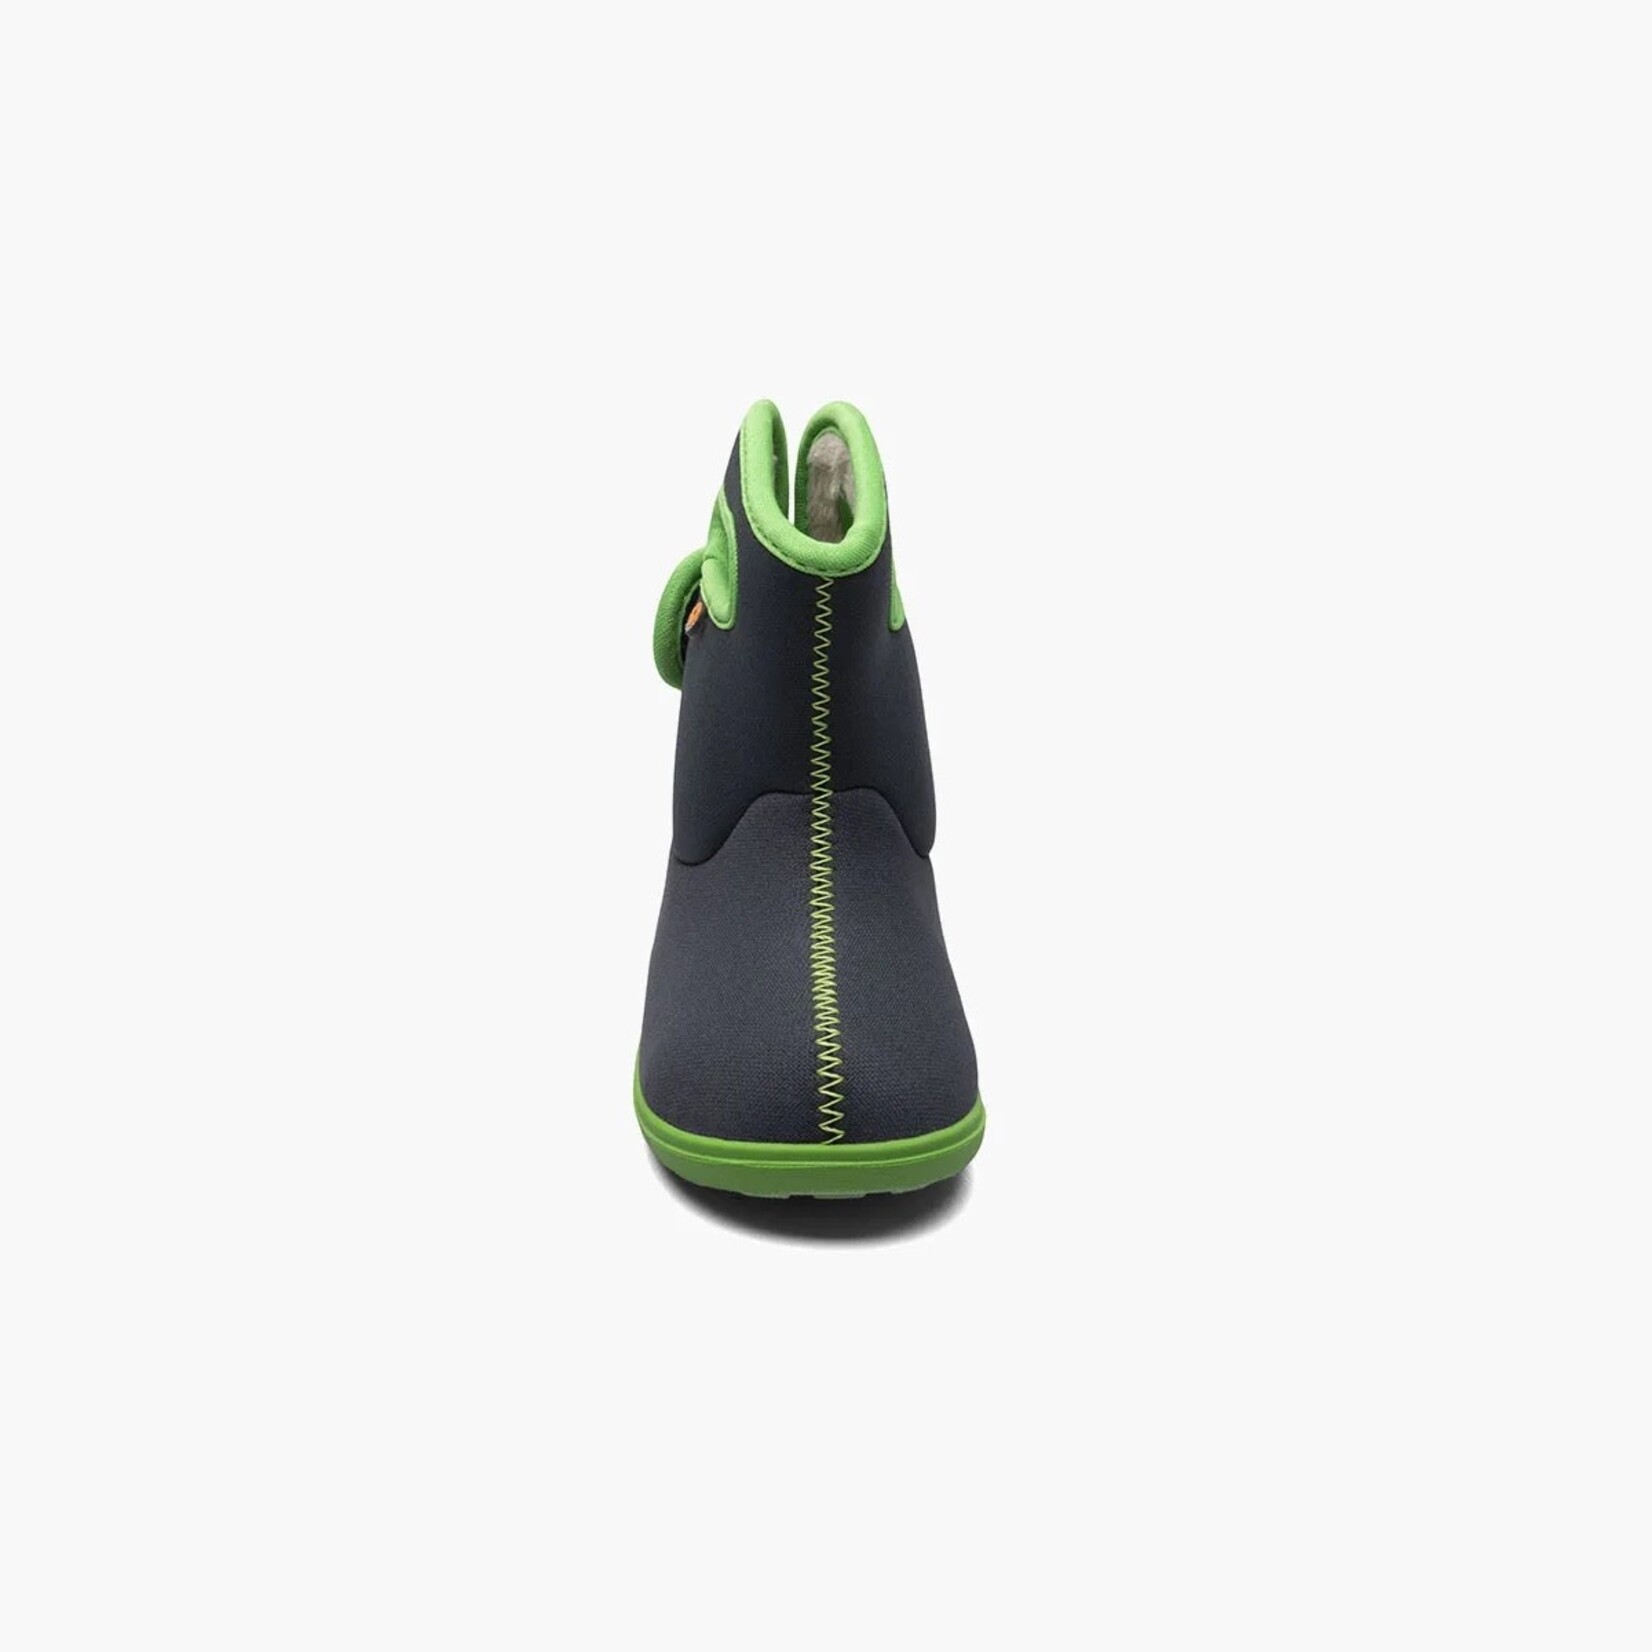 BOGS BOGS - Insulated Mid Season Waterproof Boots 'Baby Bogs II Solid' - Navy/Green